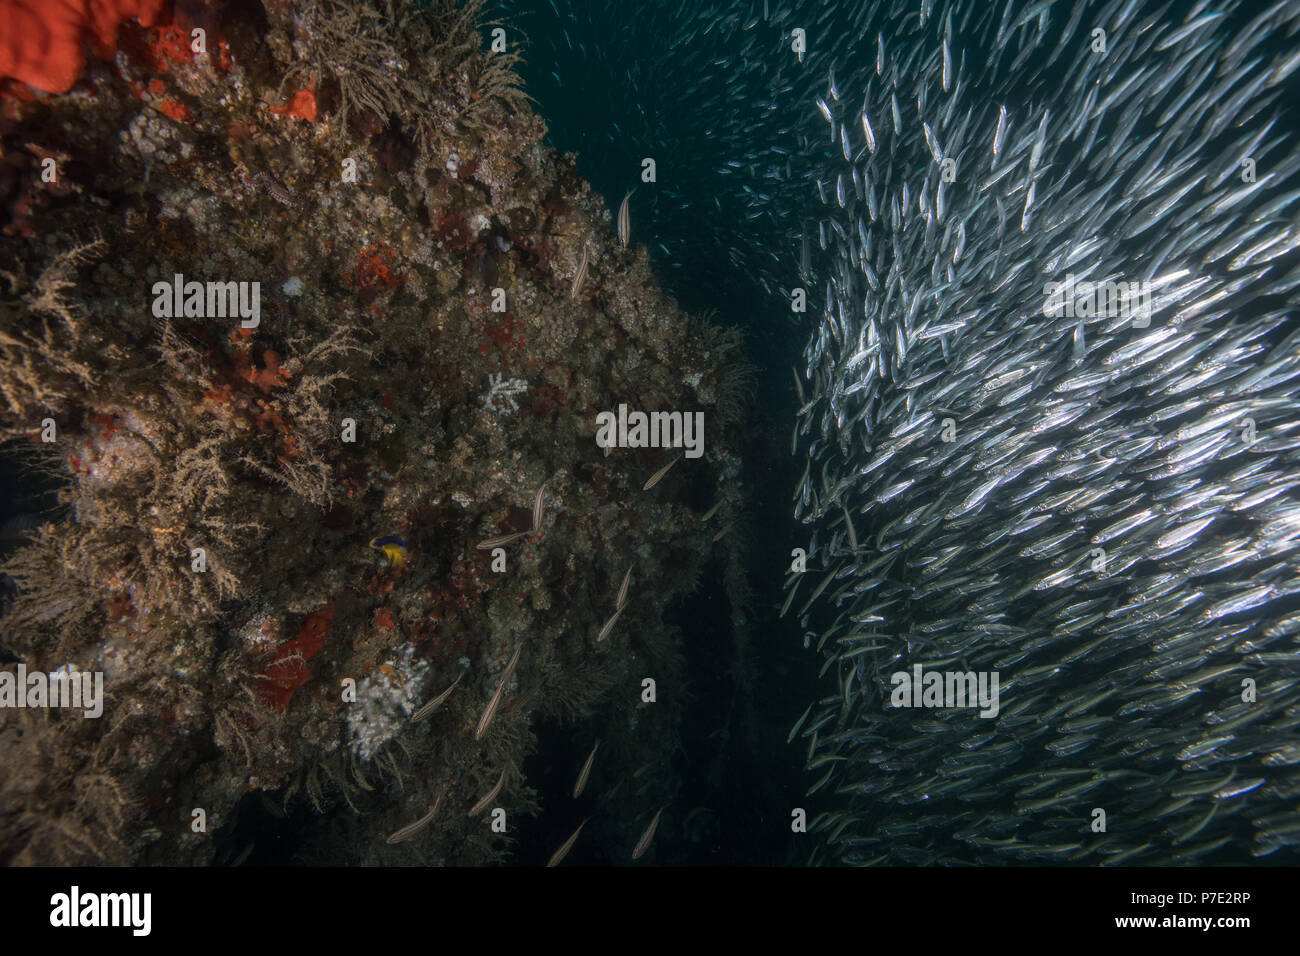 Shoals of sardines gather around a shipwreck, Isla Mujeres, Quintana Roo, Mexico Stock Photo